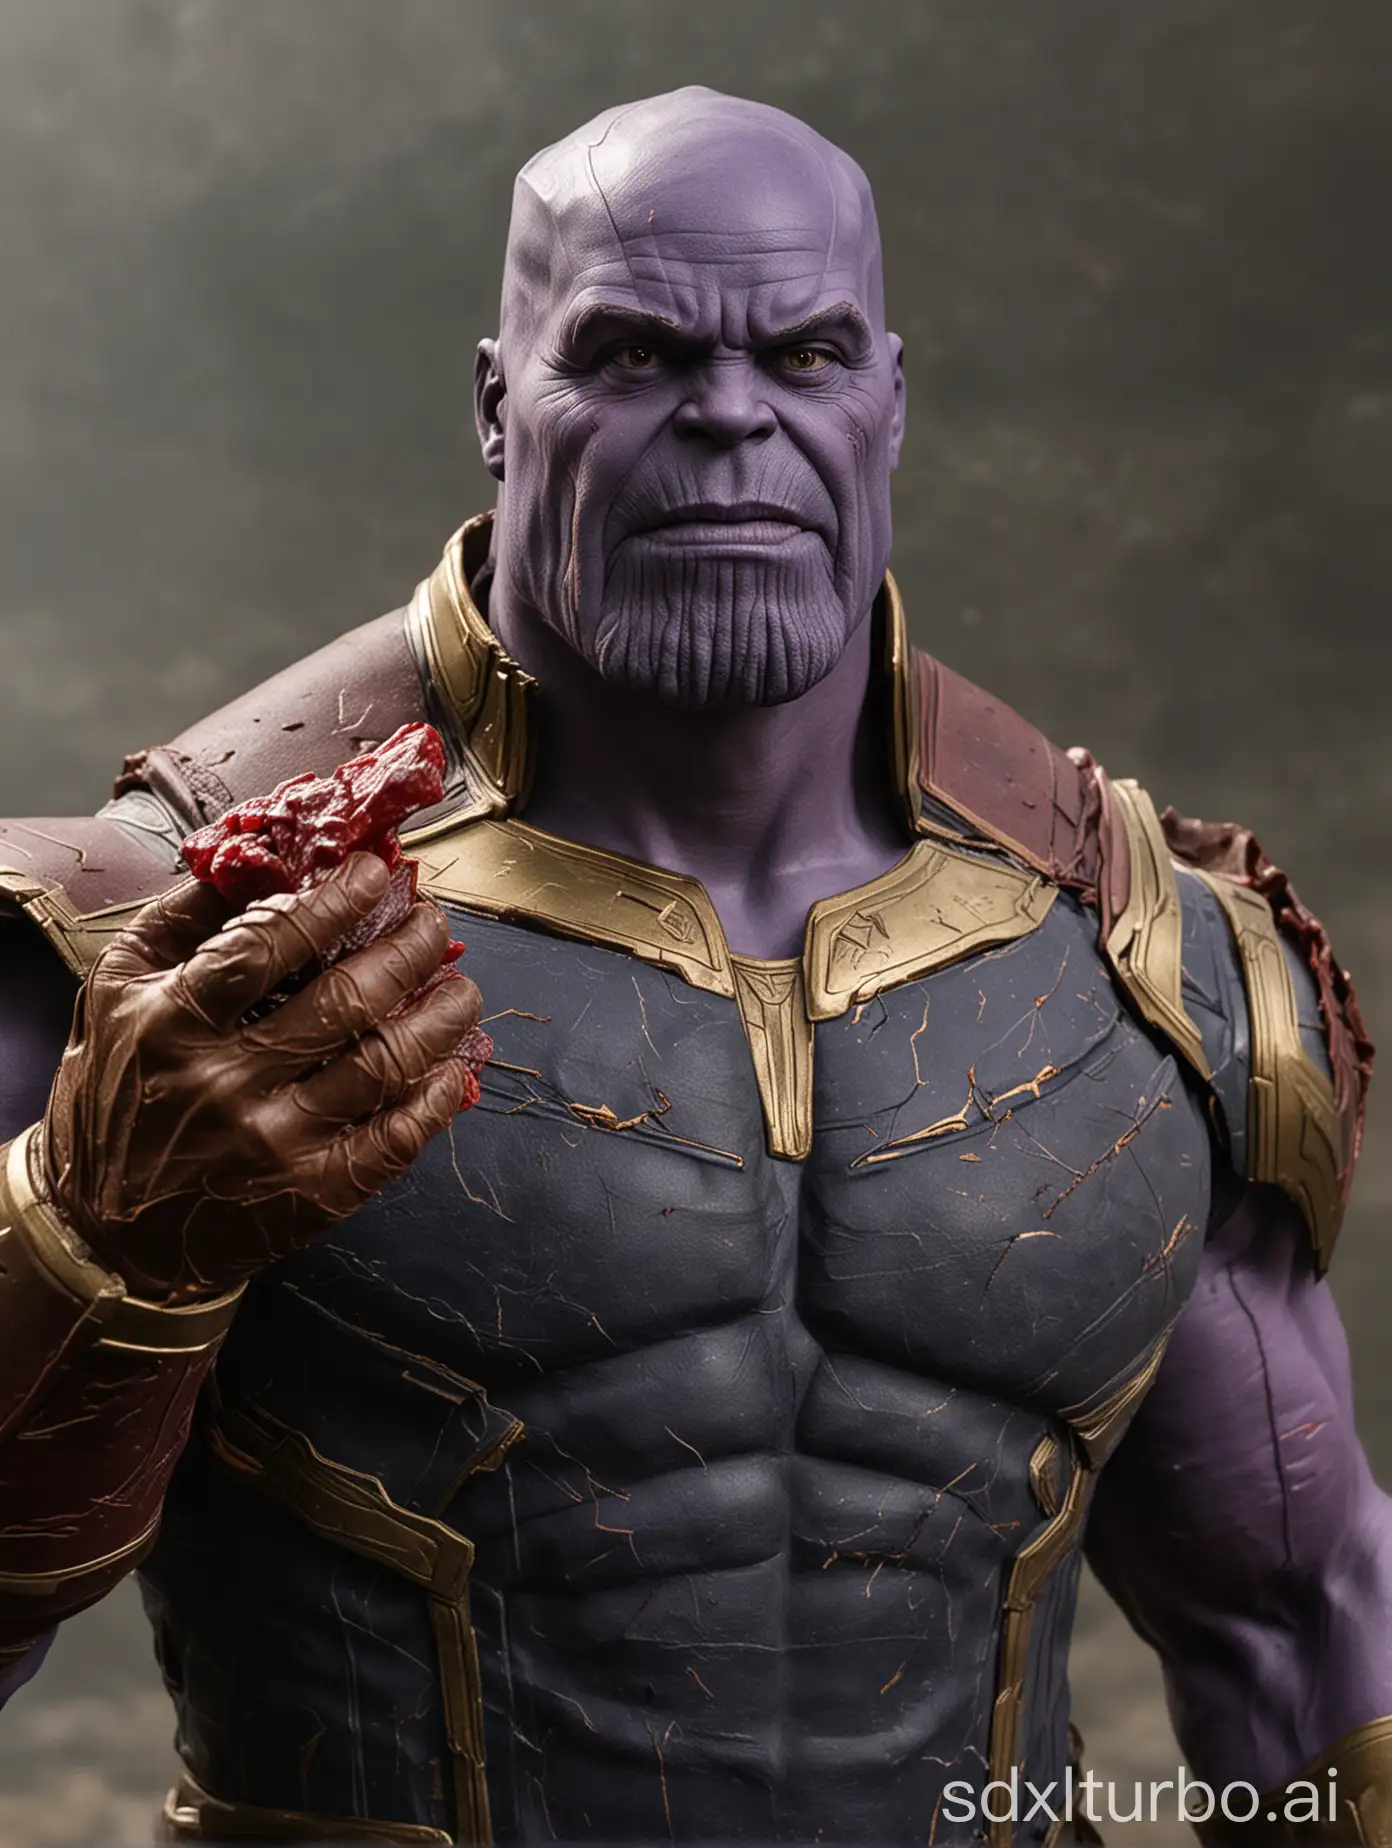 Marvel-Movie-Character-Thanos-Holding-Beef-Jerky